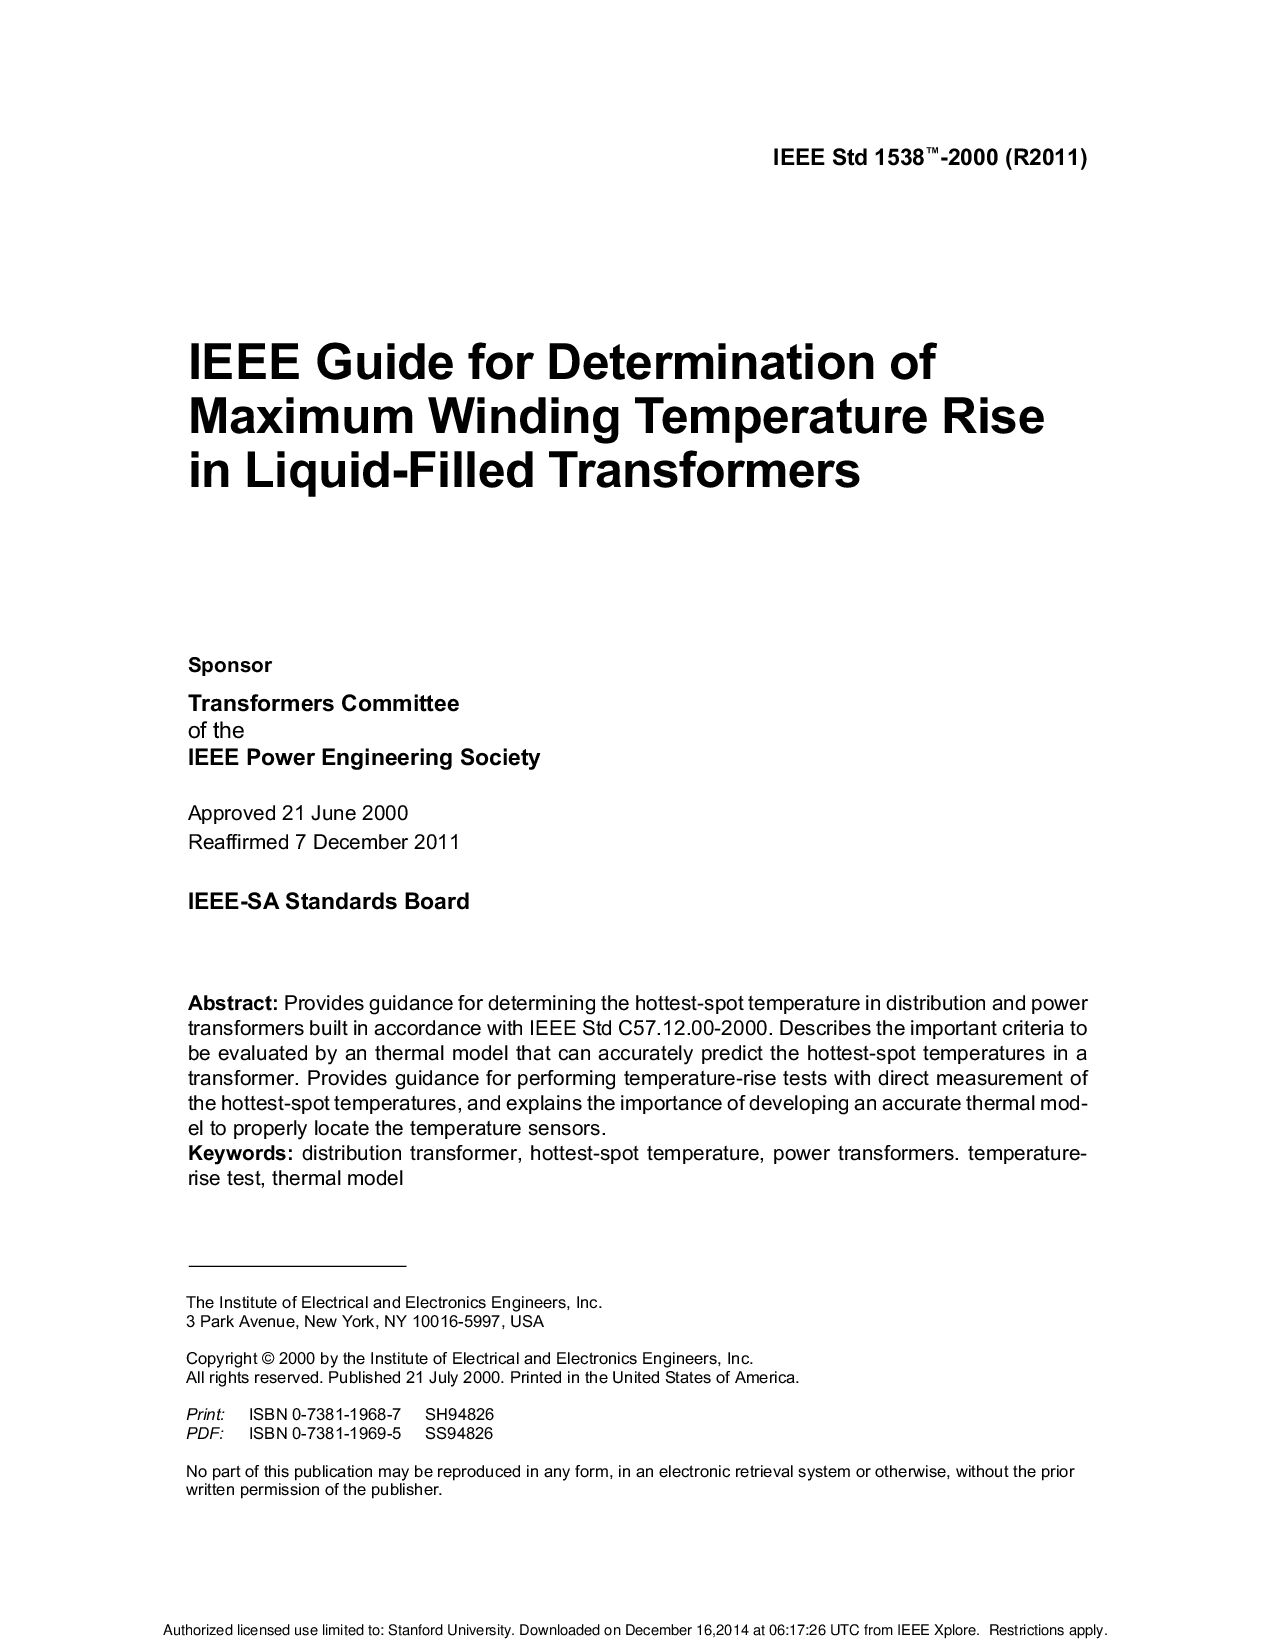 IEEE Std 1538-2000(R2011)封面图